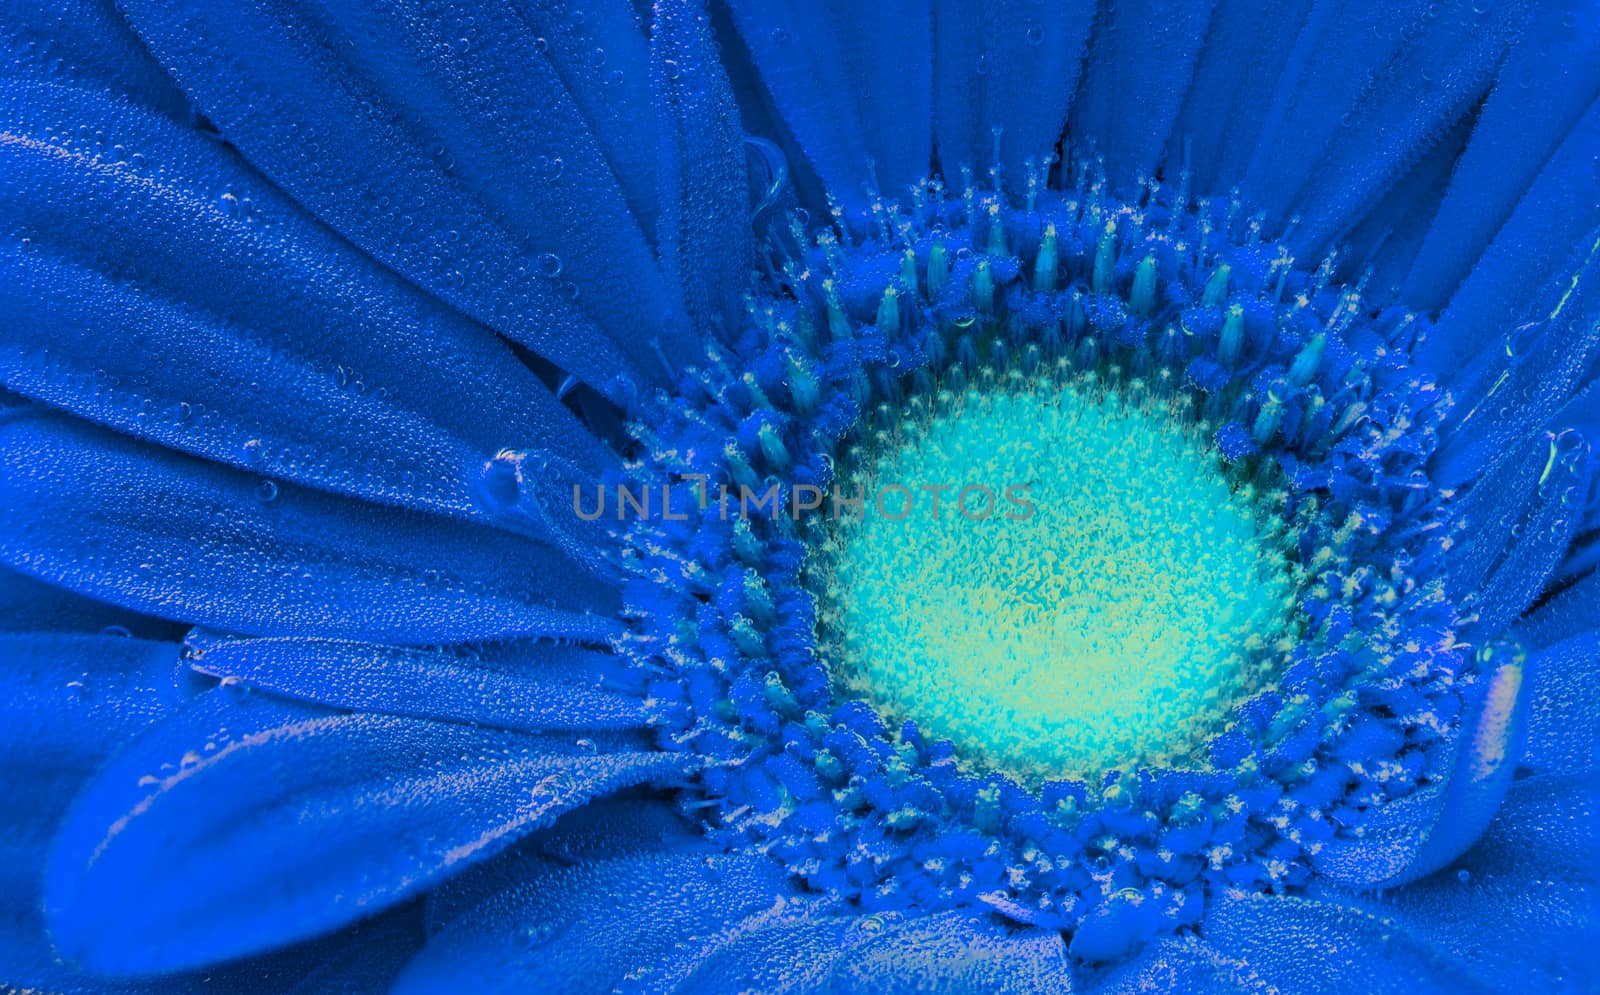 Classic blue toned underwater gerbera jamesonii flower under air bubbles close-up